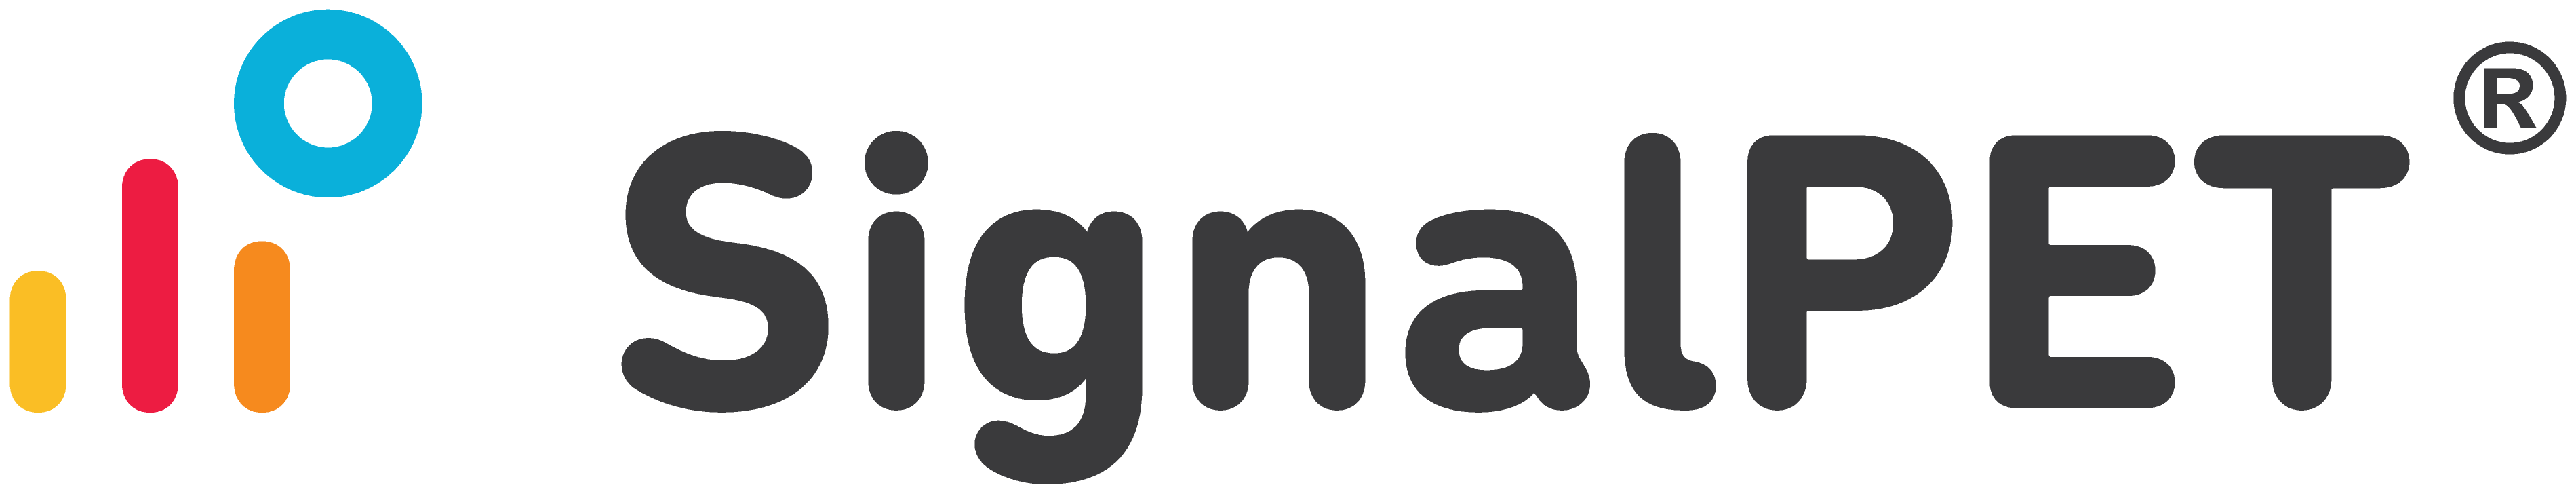 SignalPET logo